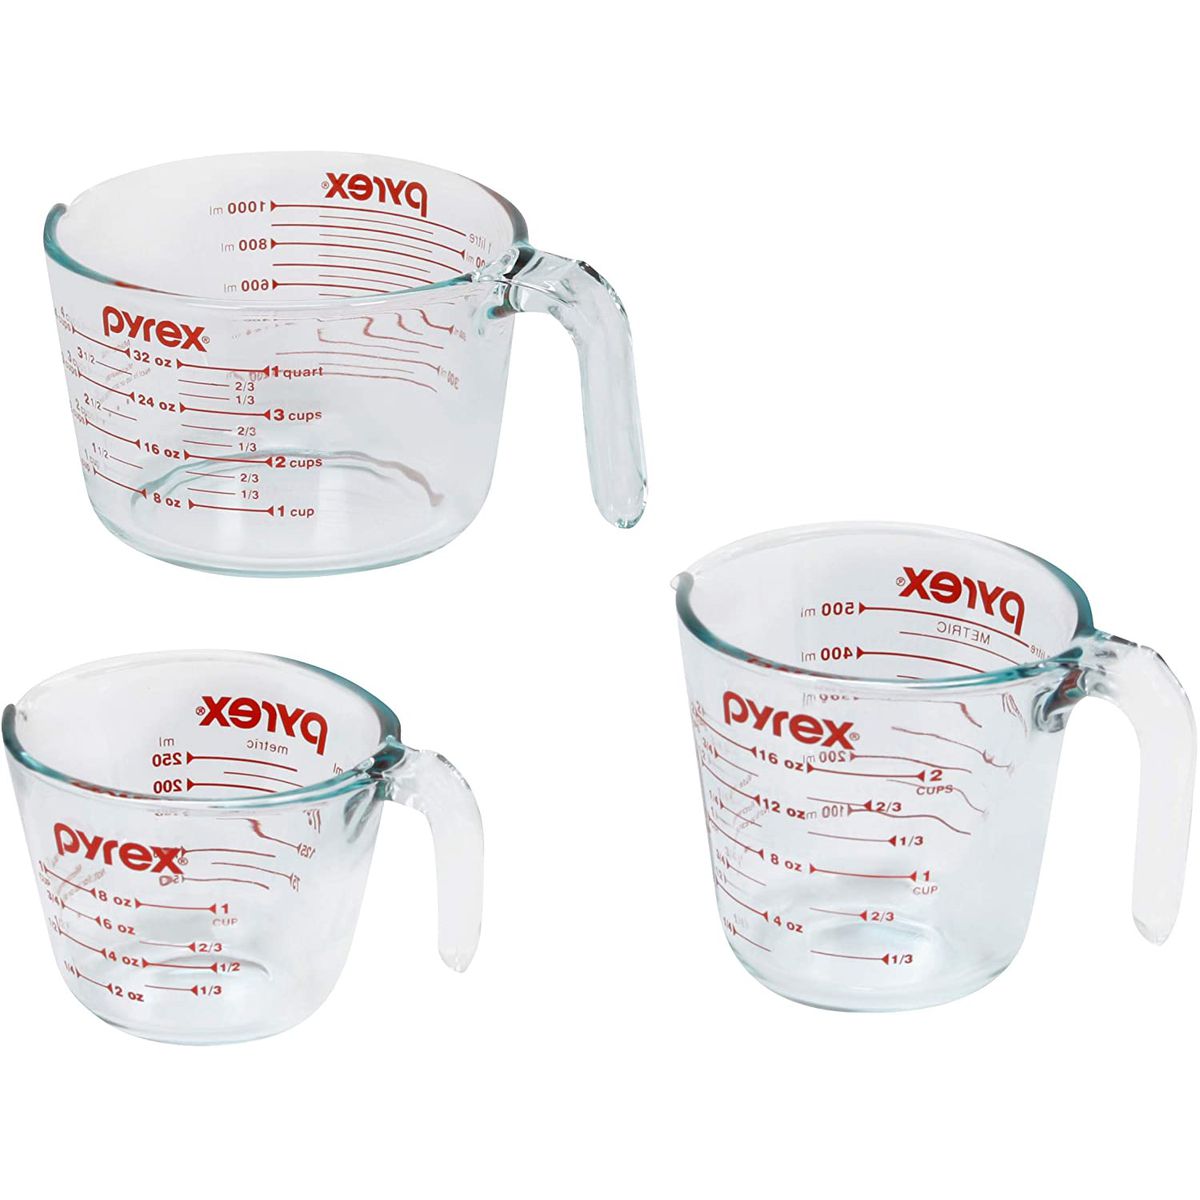 Pyrex glass measuring cup set